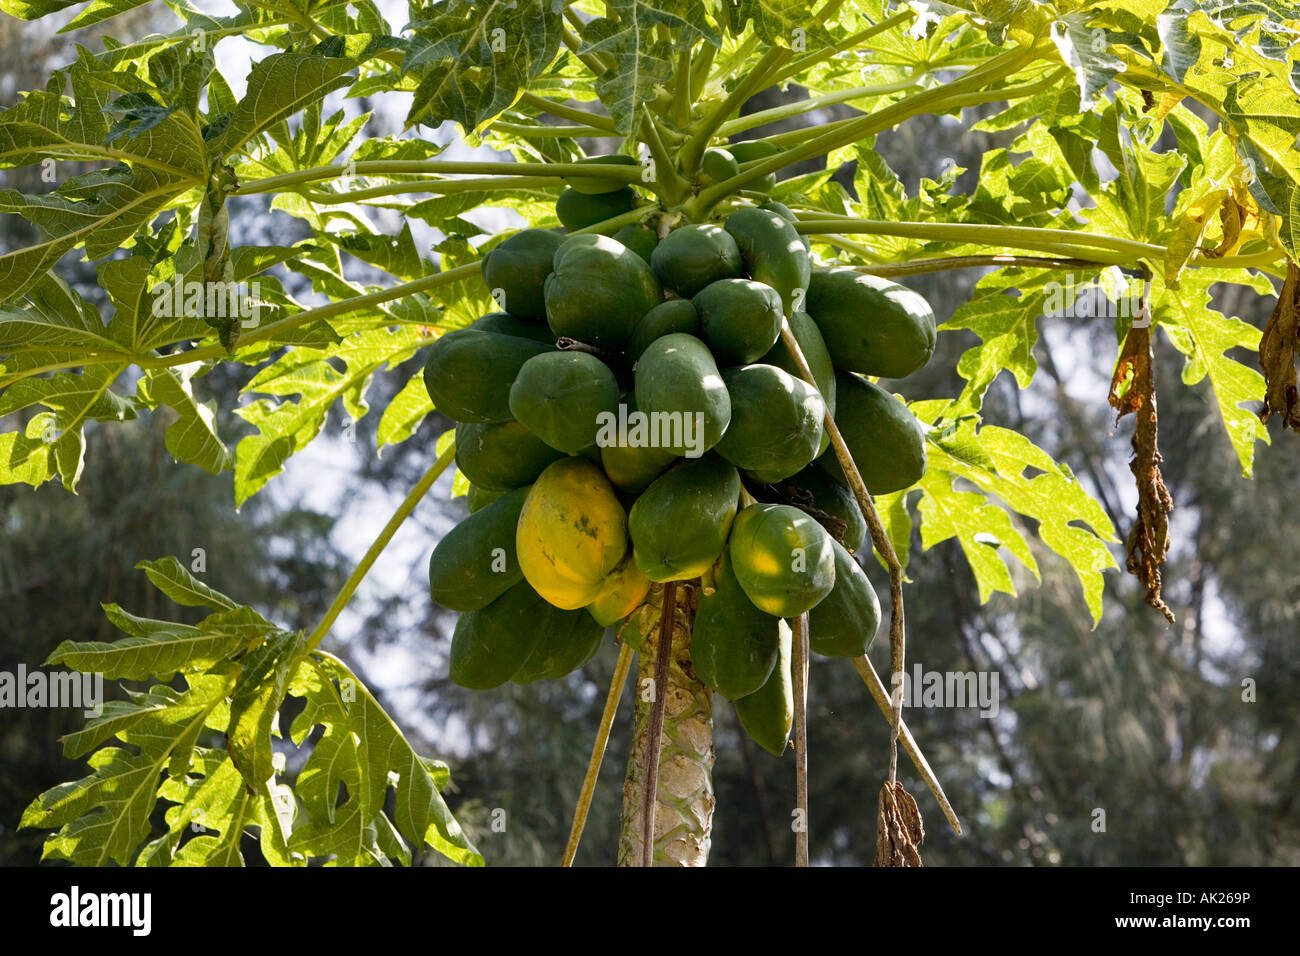 Carica papaya.  Papaya fruit on tree in India Stock Photo